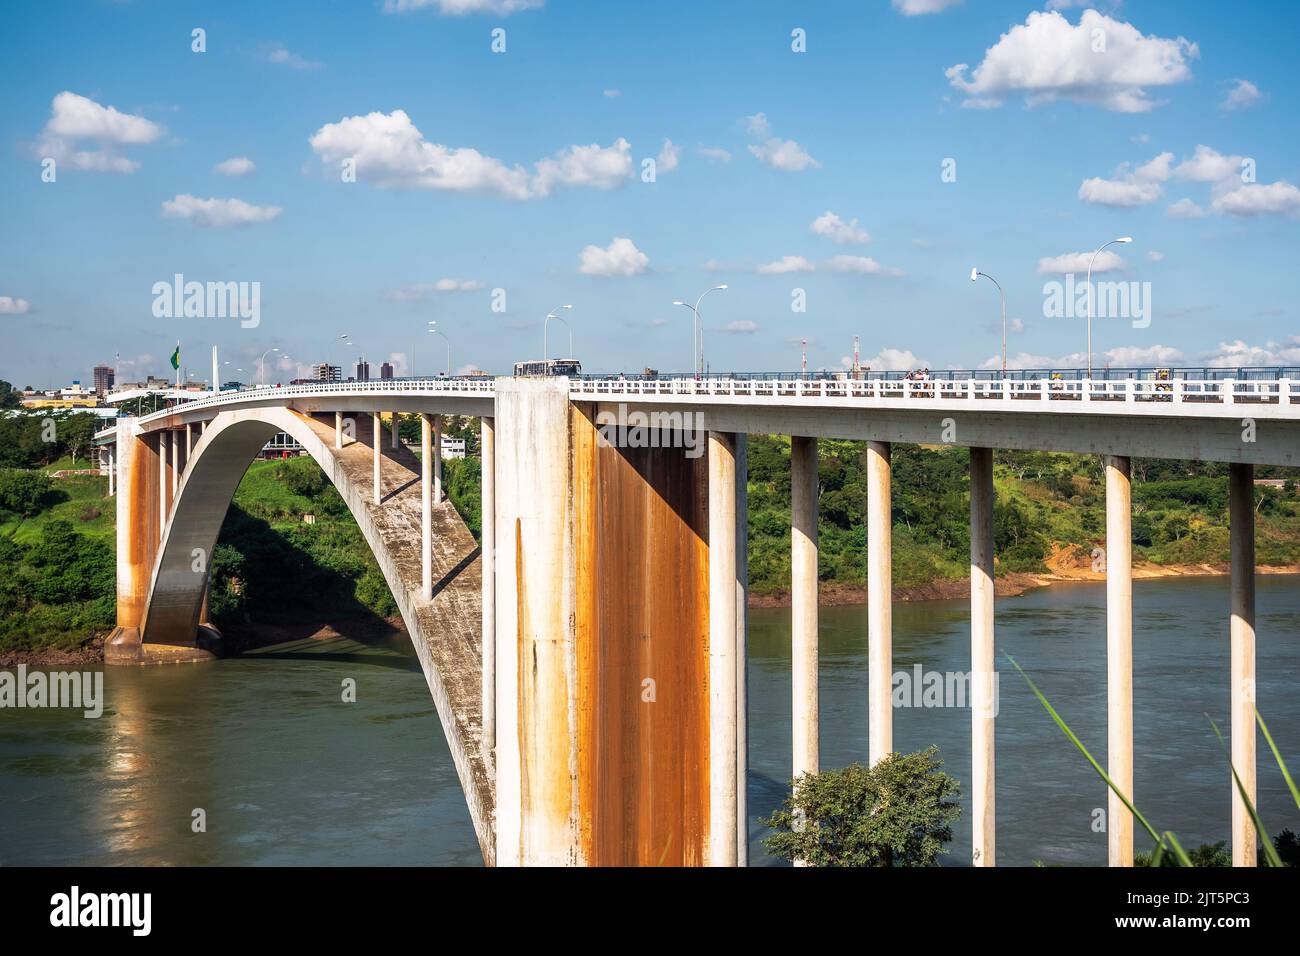 Friendship Bridge (Portuguese: Ponte da Amizade ) over the Parana river, connecting Foz do Iguacu, Brazil, to Ciudad del Este in Paraguay. Stock Photo